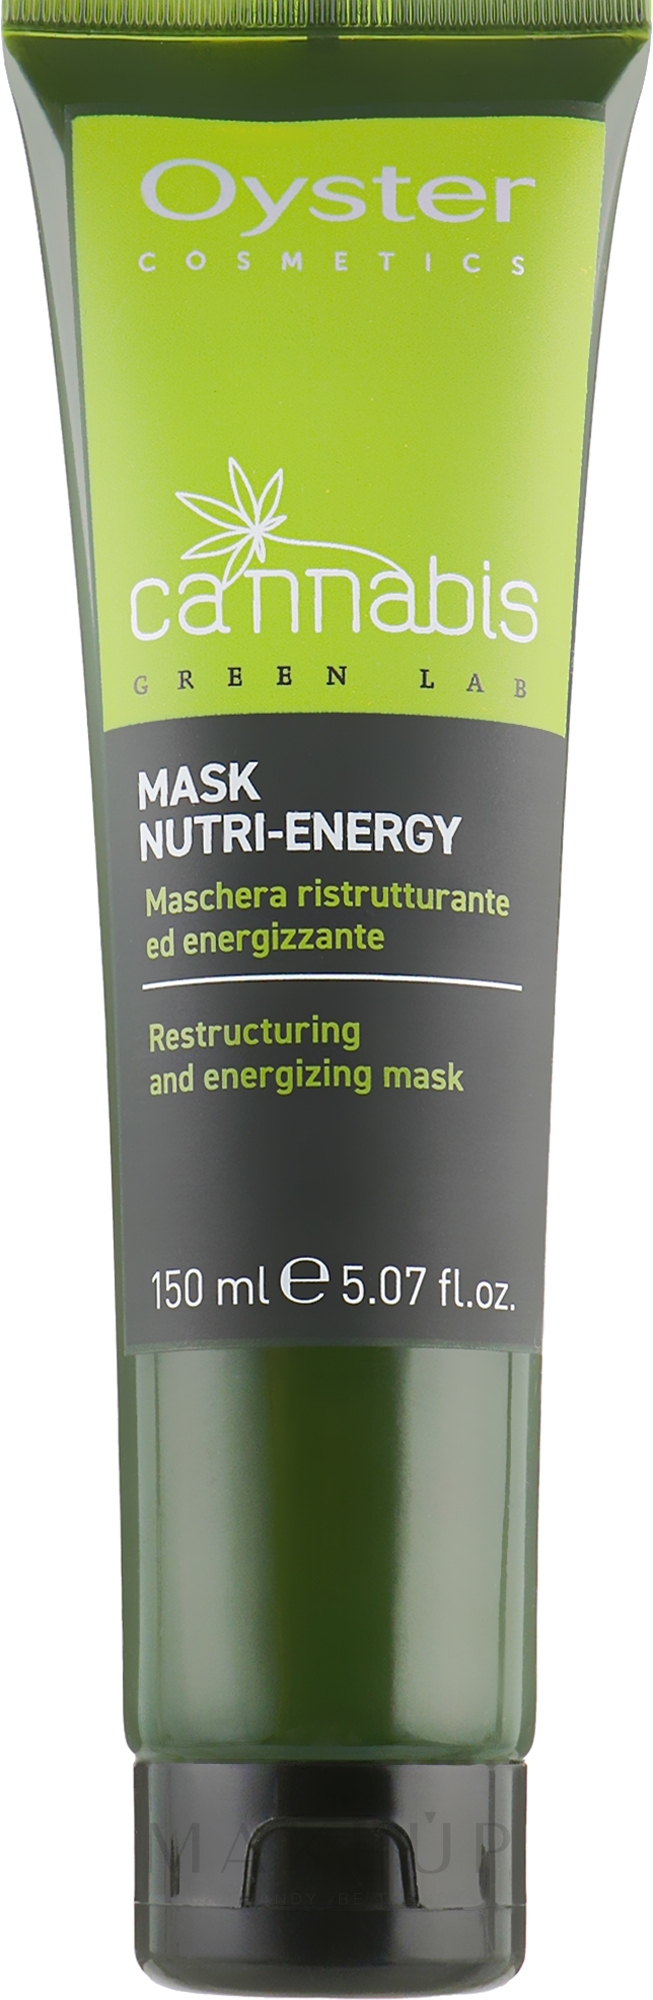 Revitalisierende Haarmaske - Oyster Cosmetics Cannabis Green Lab Mask Nutri-Energy — Bild 150 ml